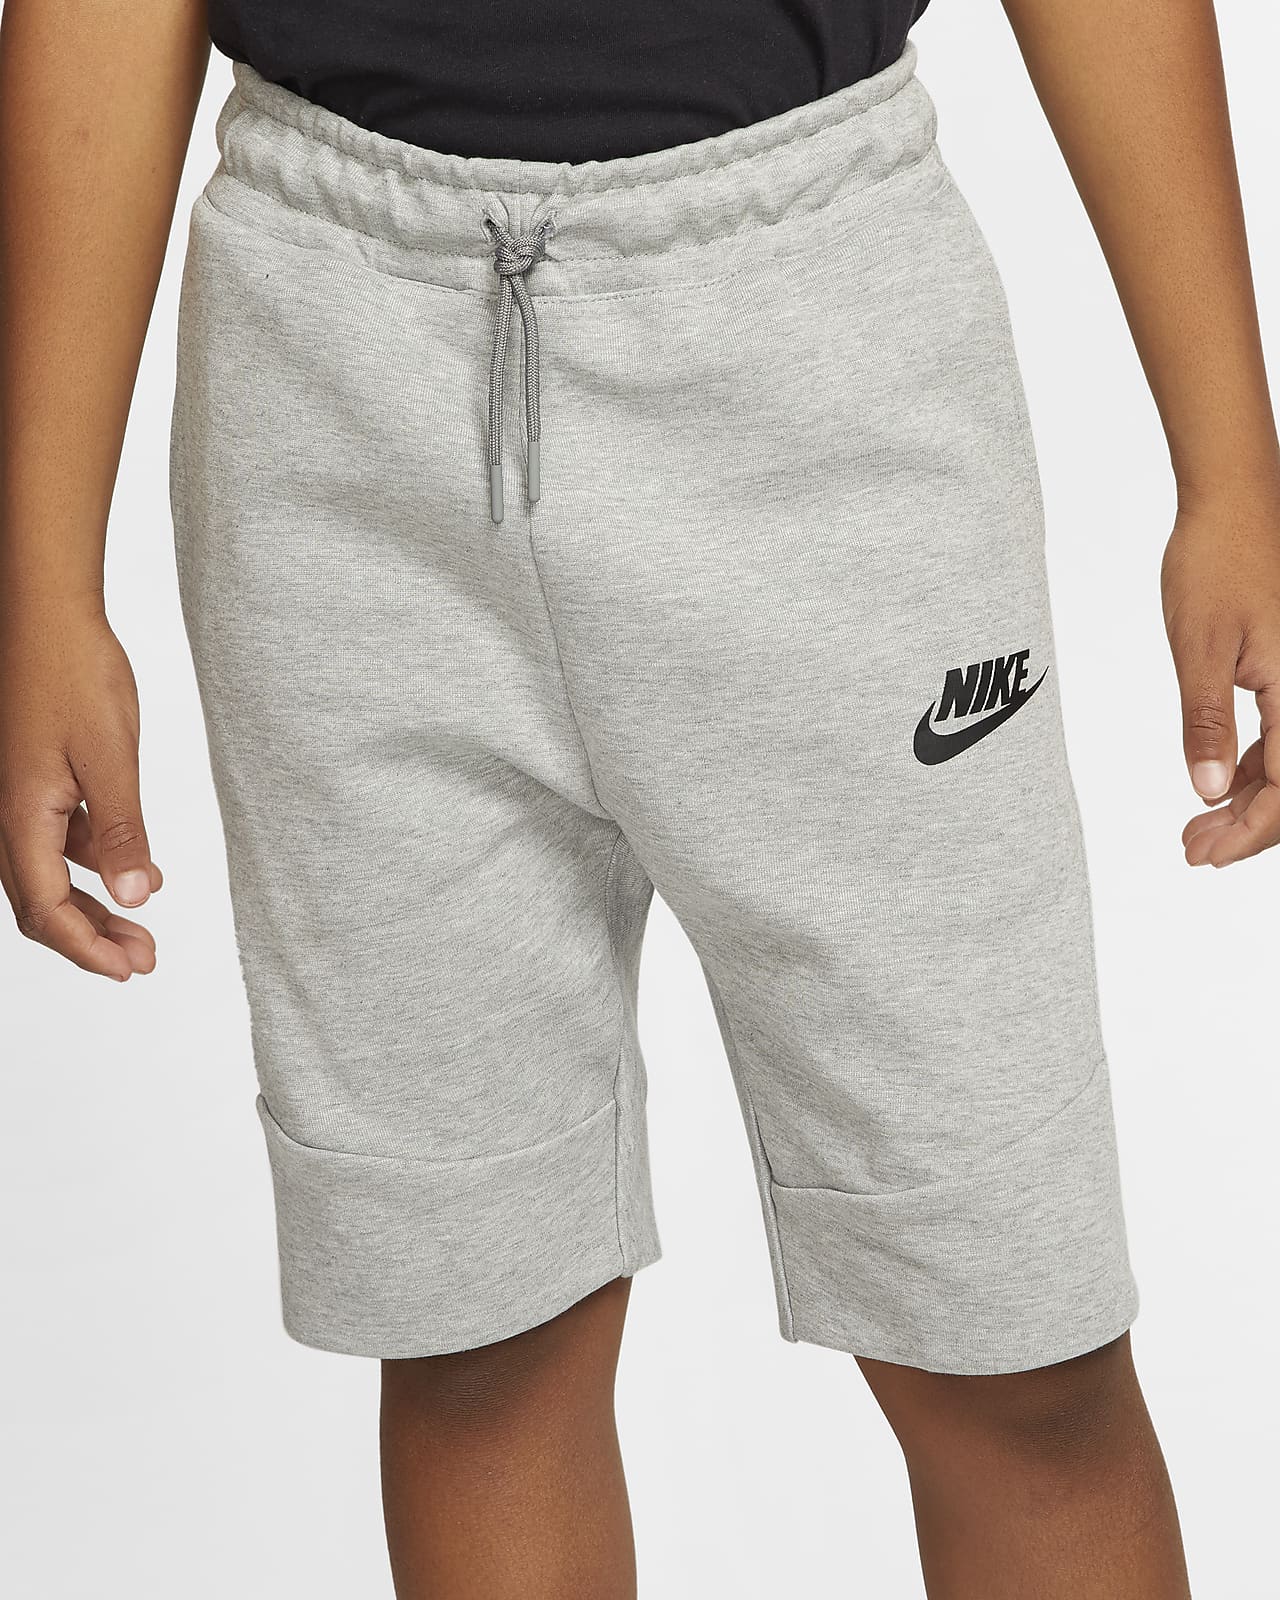 nike grey shorts fleece